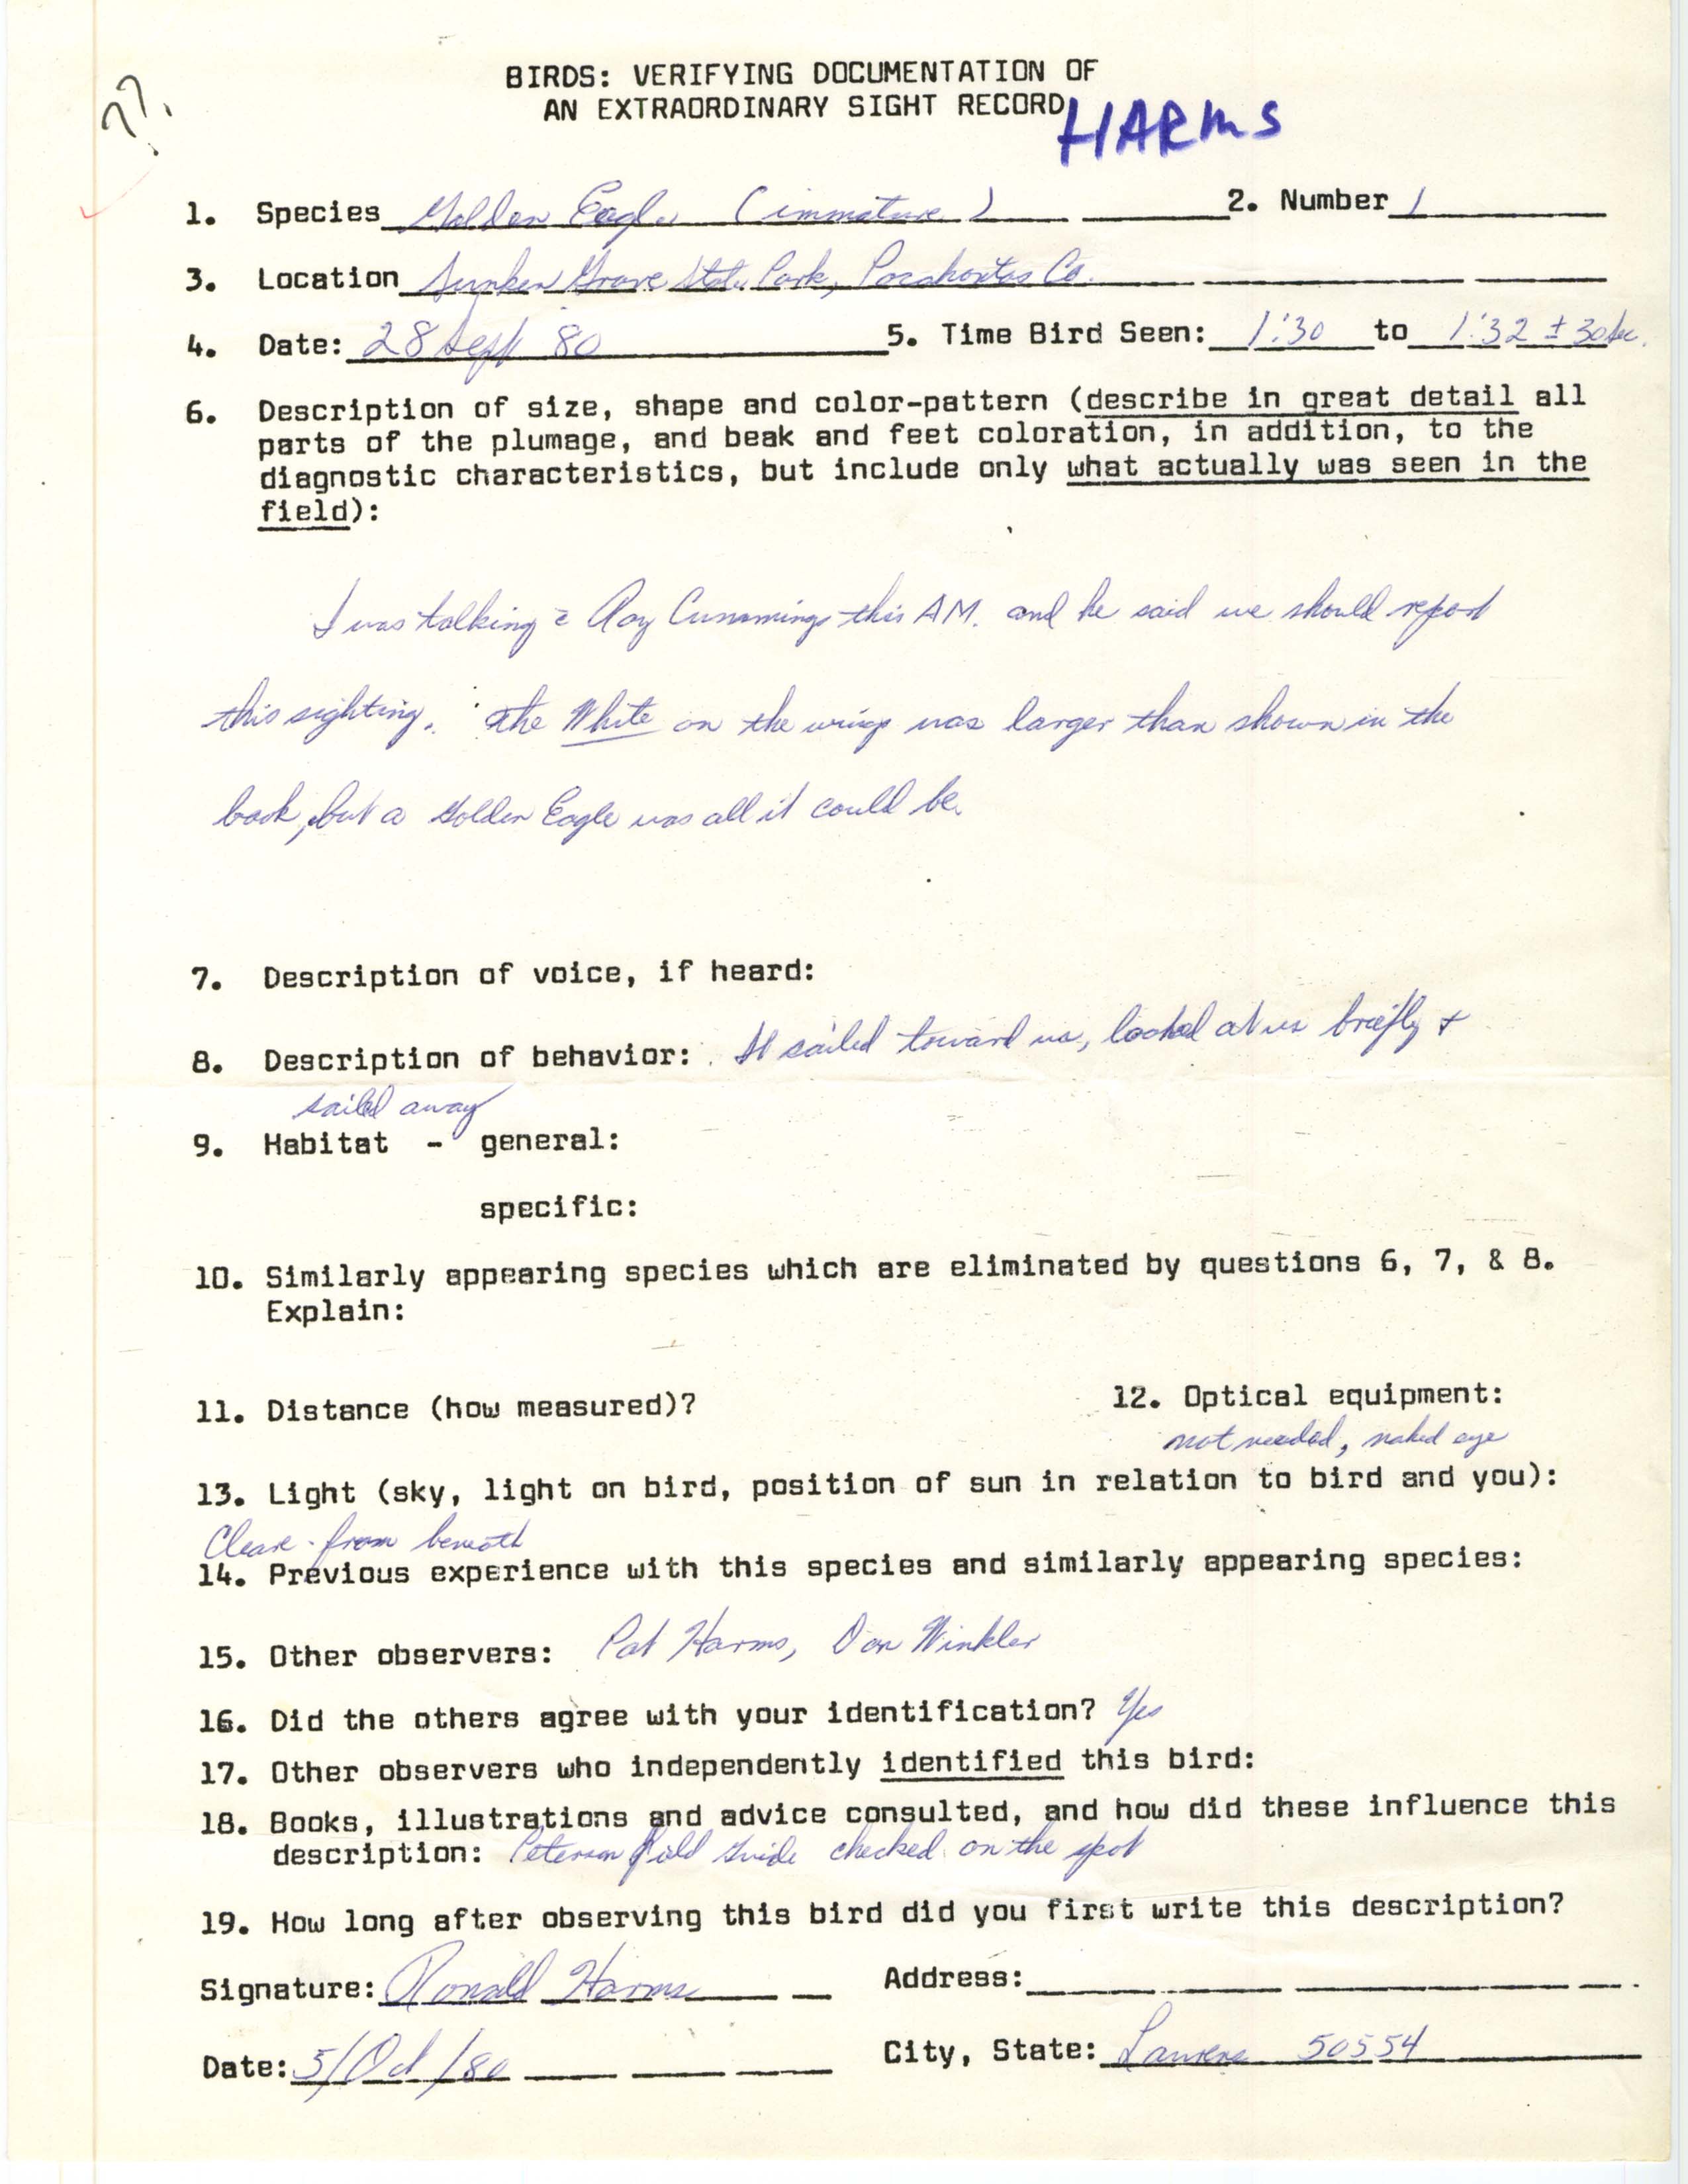 Rare bird documentation form for Golden Eagle at Sunken Grove State Park, 1980